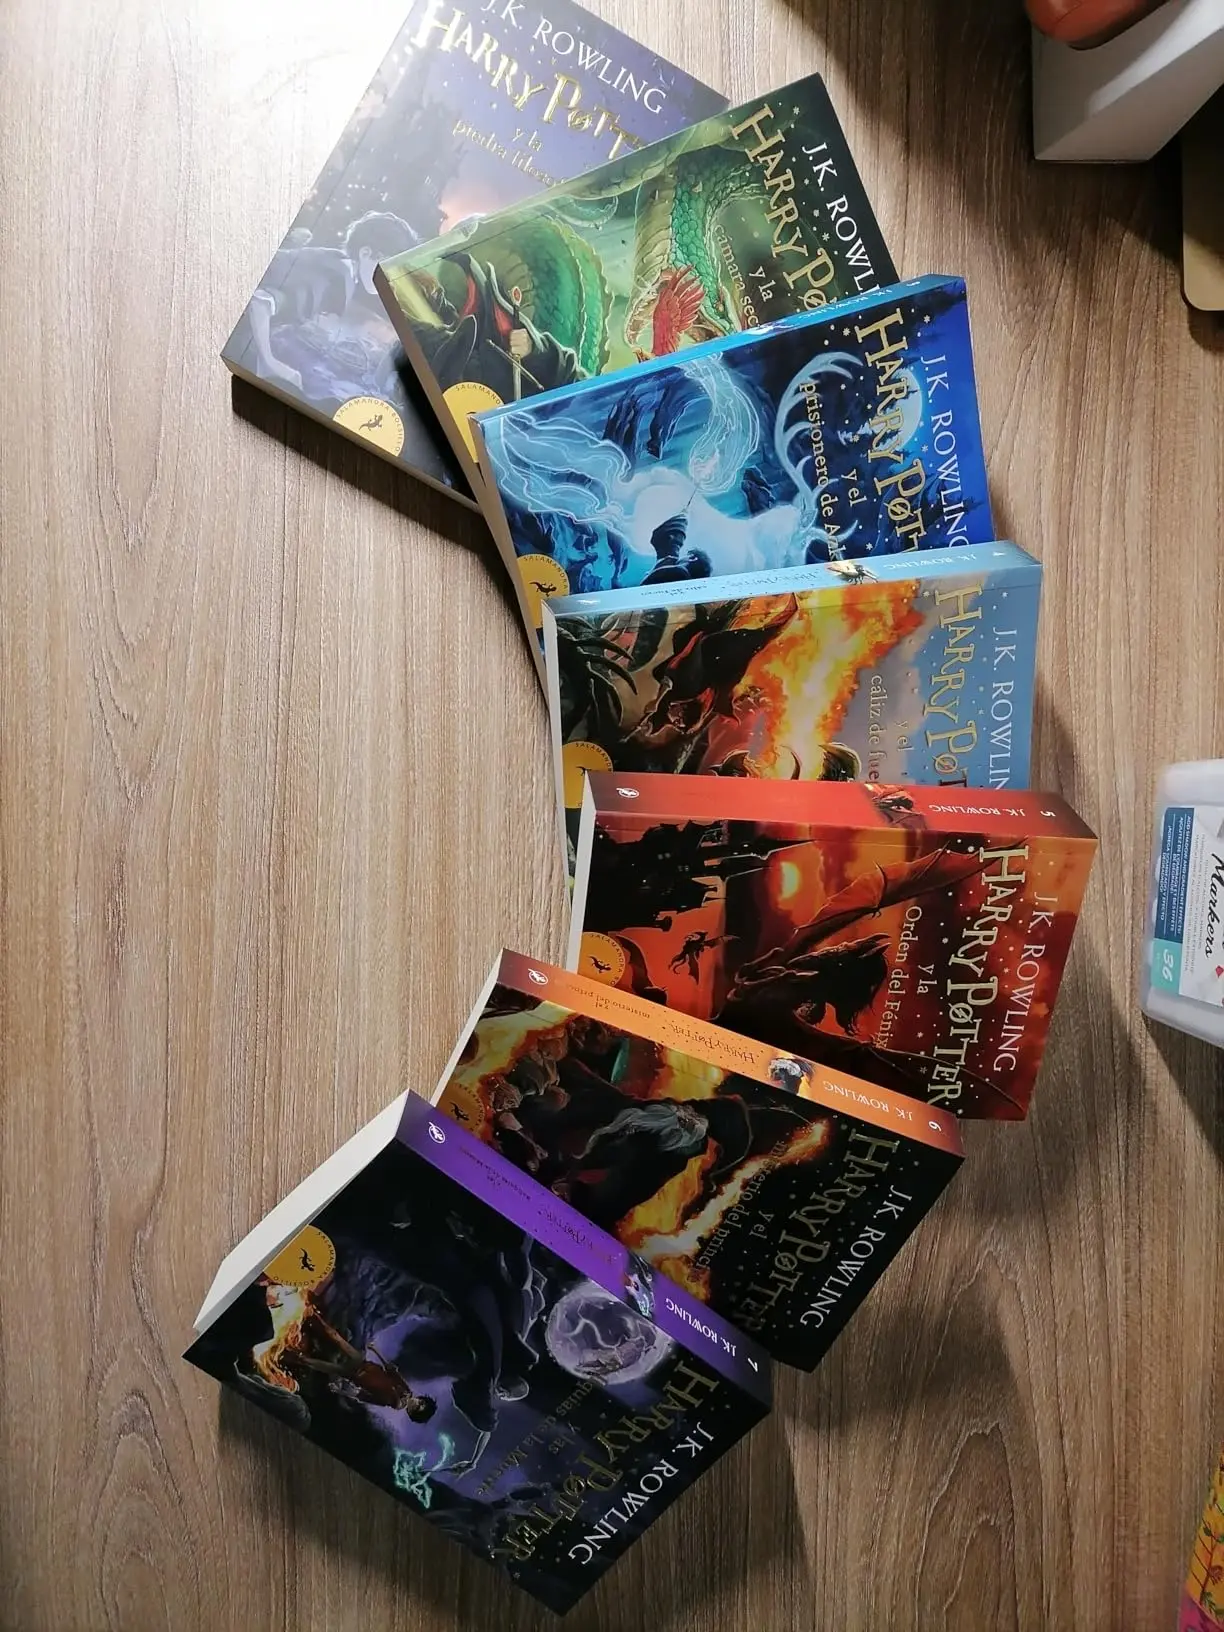 libros de harry potter encuadernados - Cuántos son los libros de Harry Potter